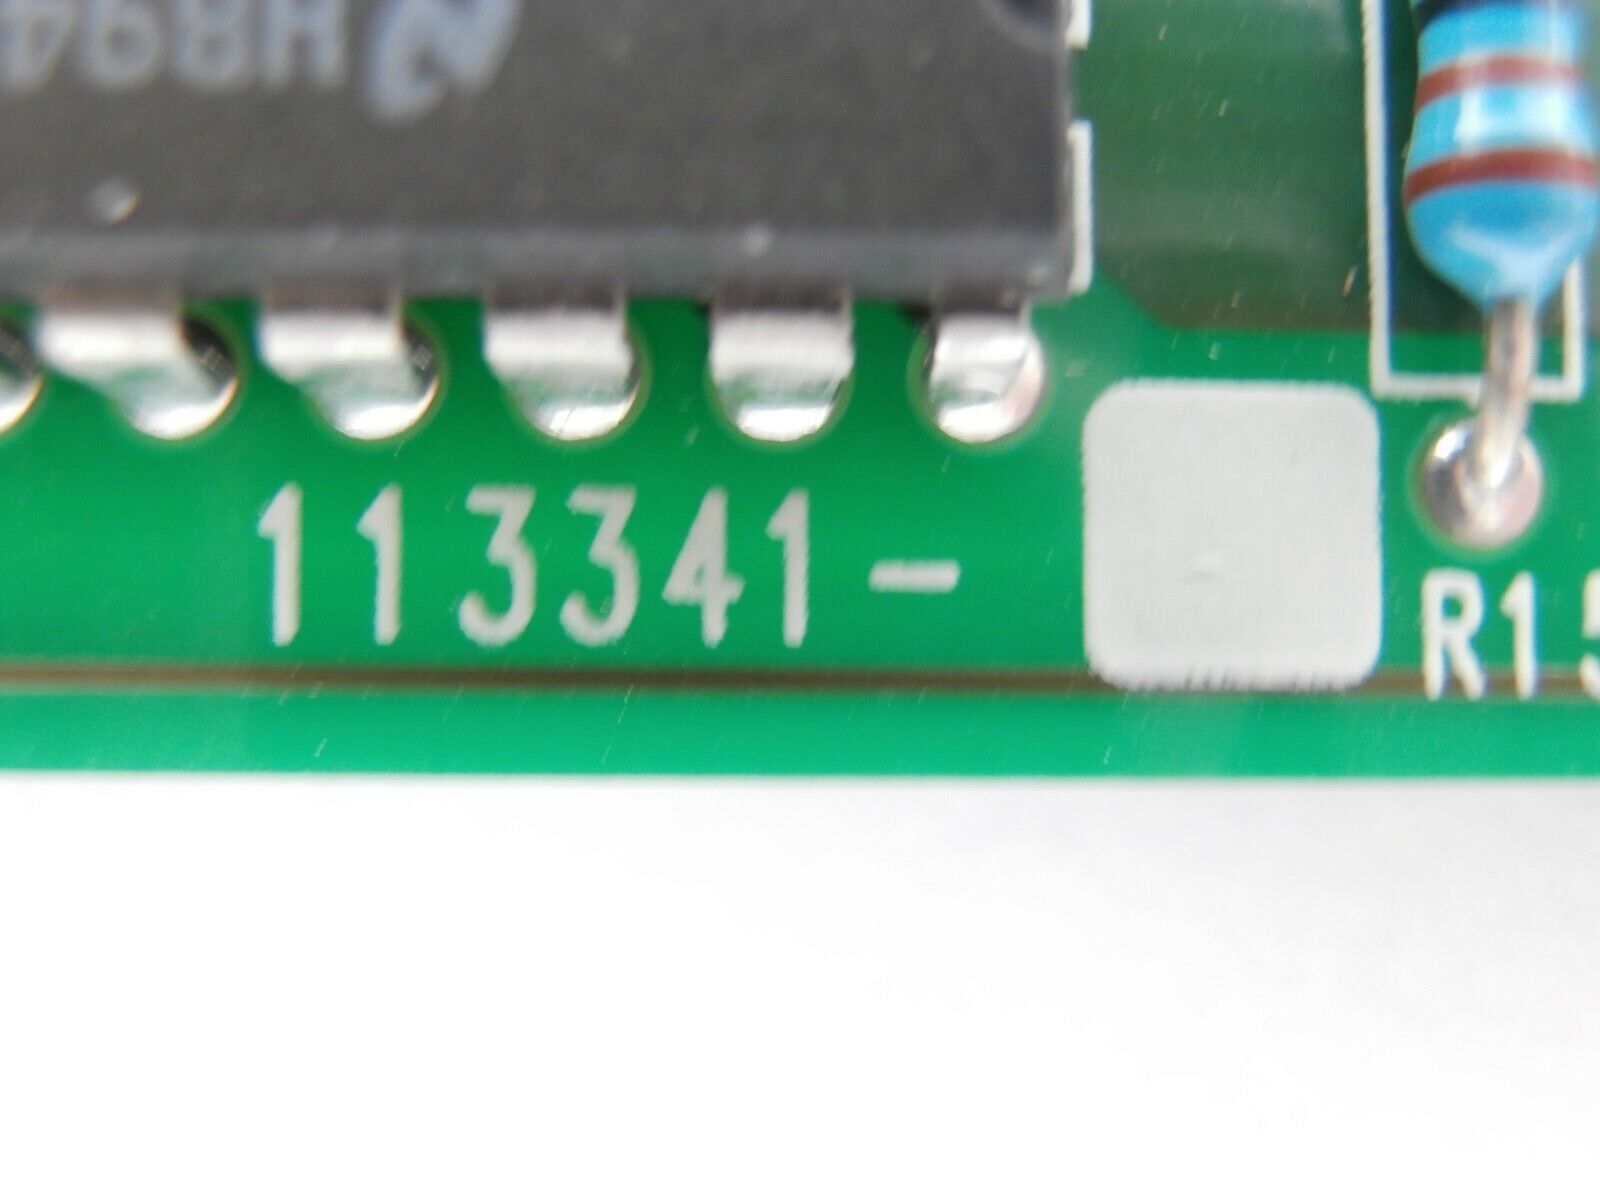 MKS Instruments 113341 Display Board PCB 152H-P0 Type 152 Working Surplus